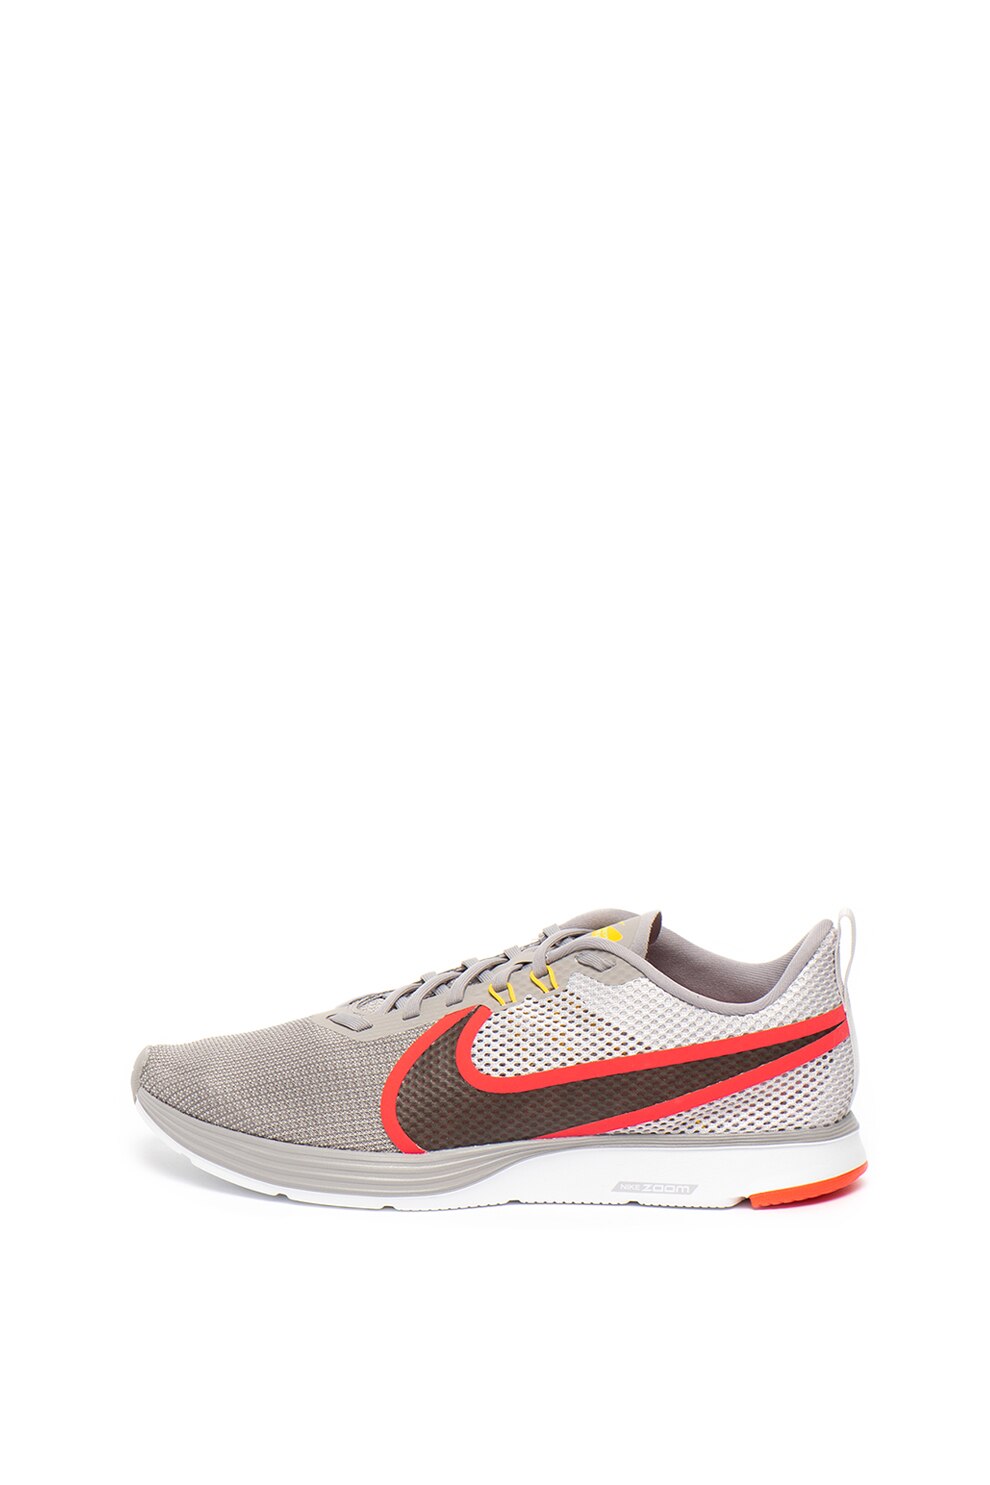 pause Characteristic Modish Nike, Pantofi sport pentru alergare Zoom Strike, Gri, 7 - eMAG.ro